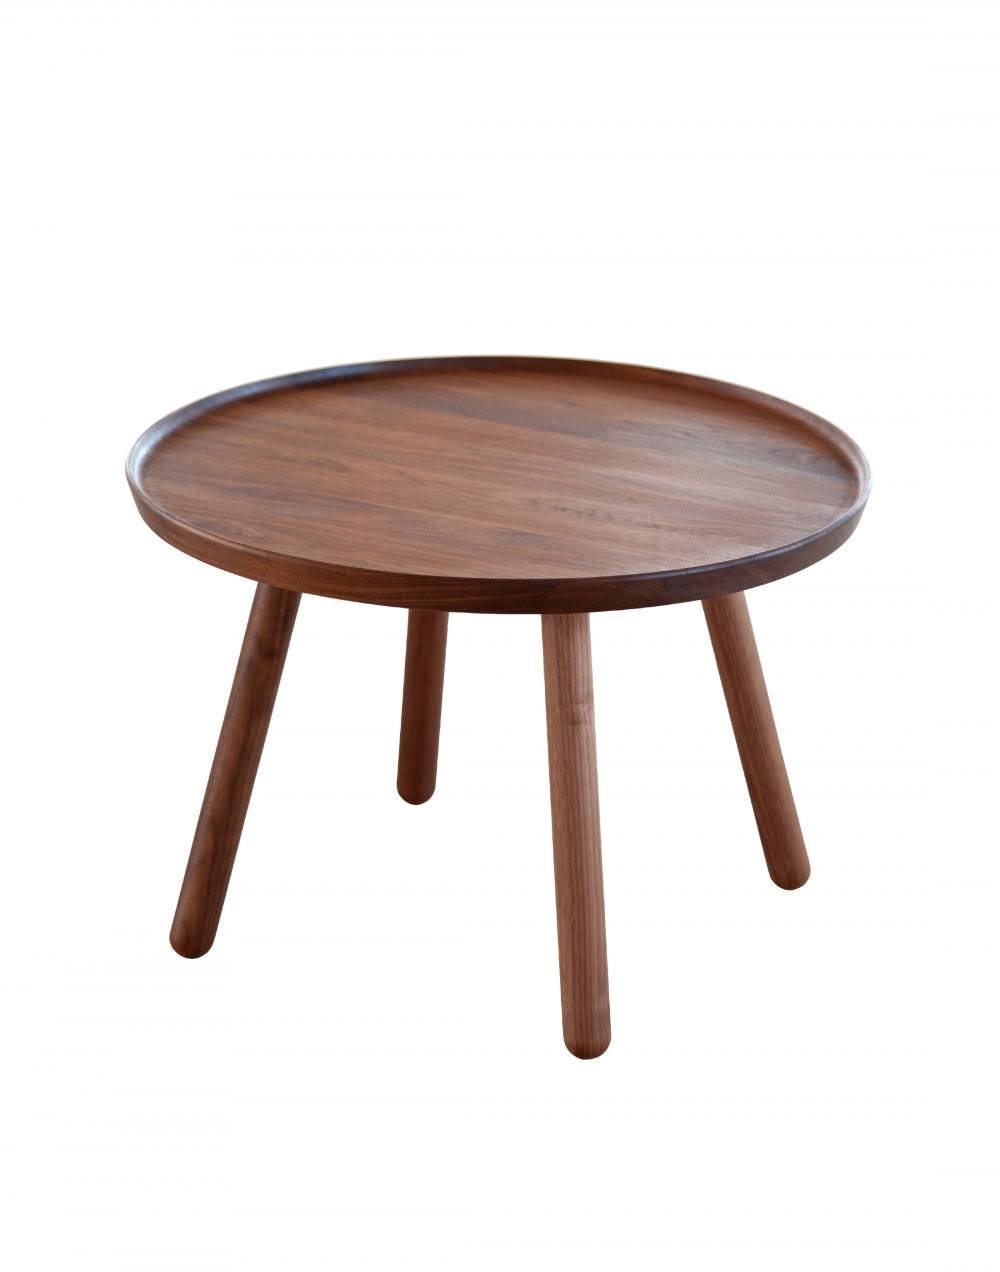 Finn Juhl Pelican Coffee Table Oregon Pine Light Wood Designer Furniture From Holloways Of Ludlow